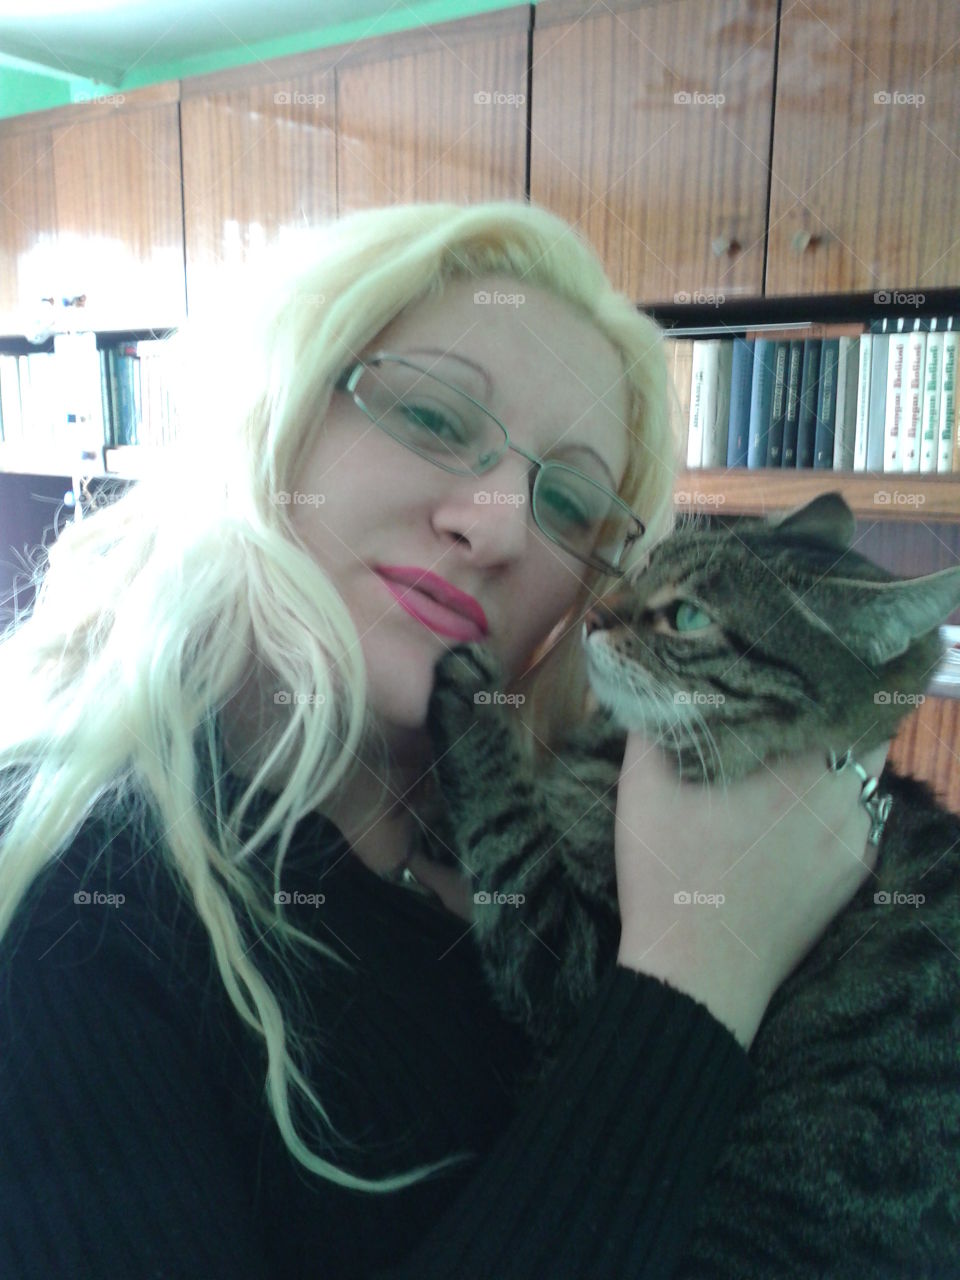 Me and my cat Bastet